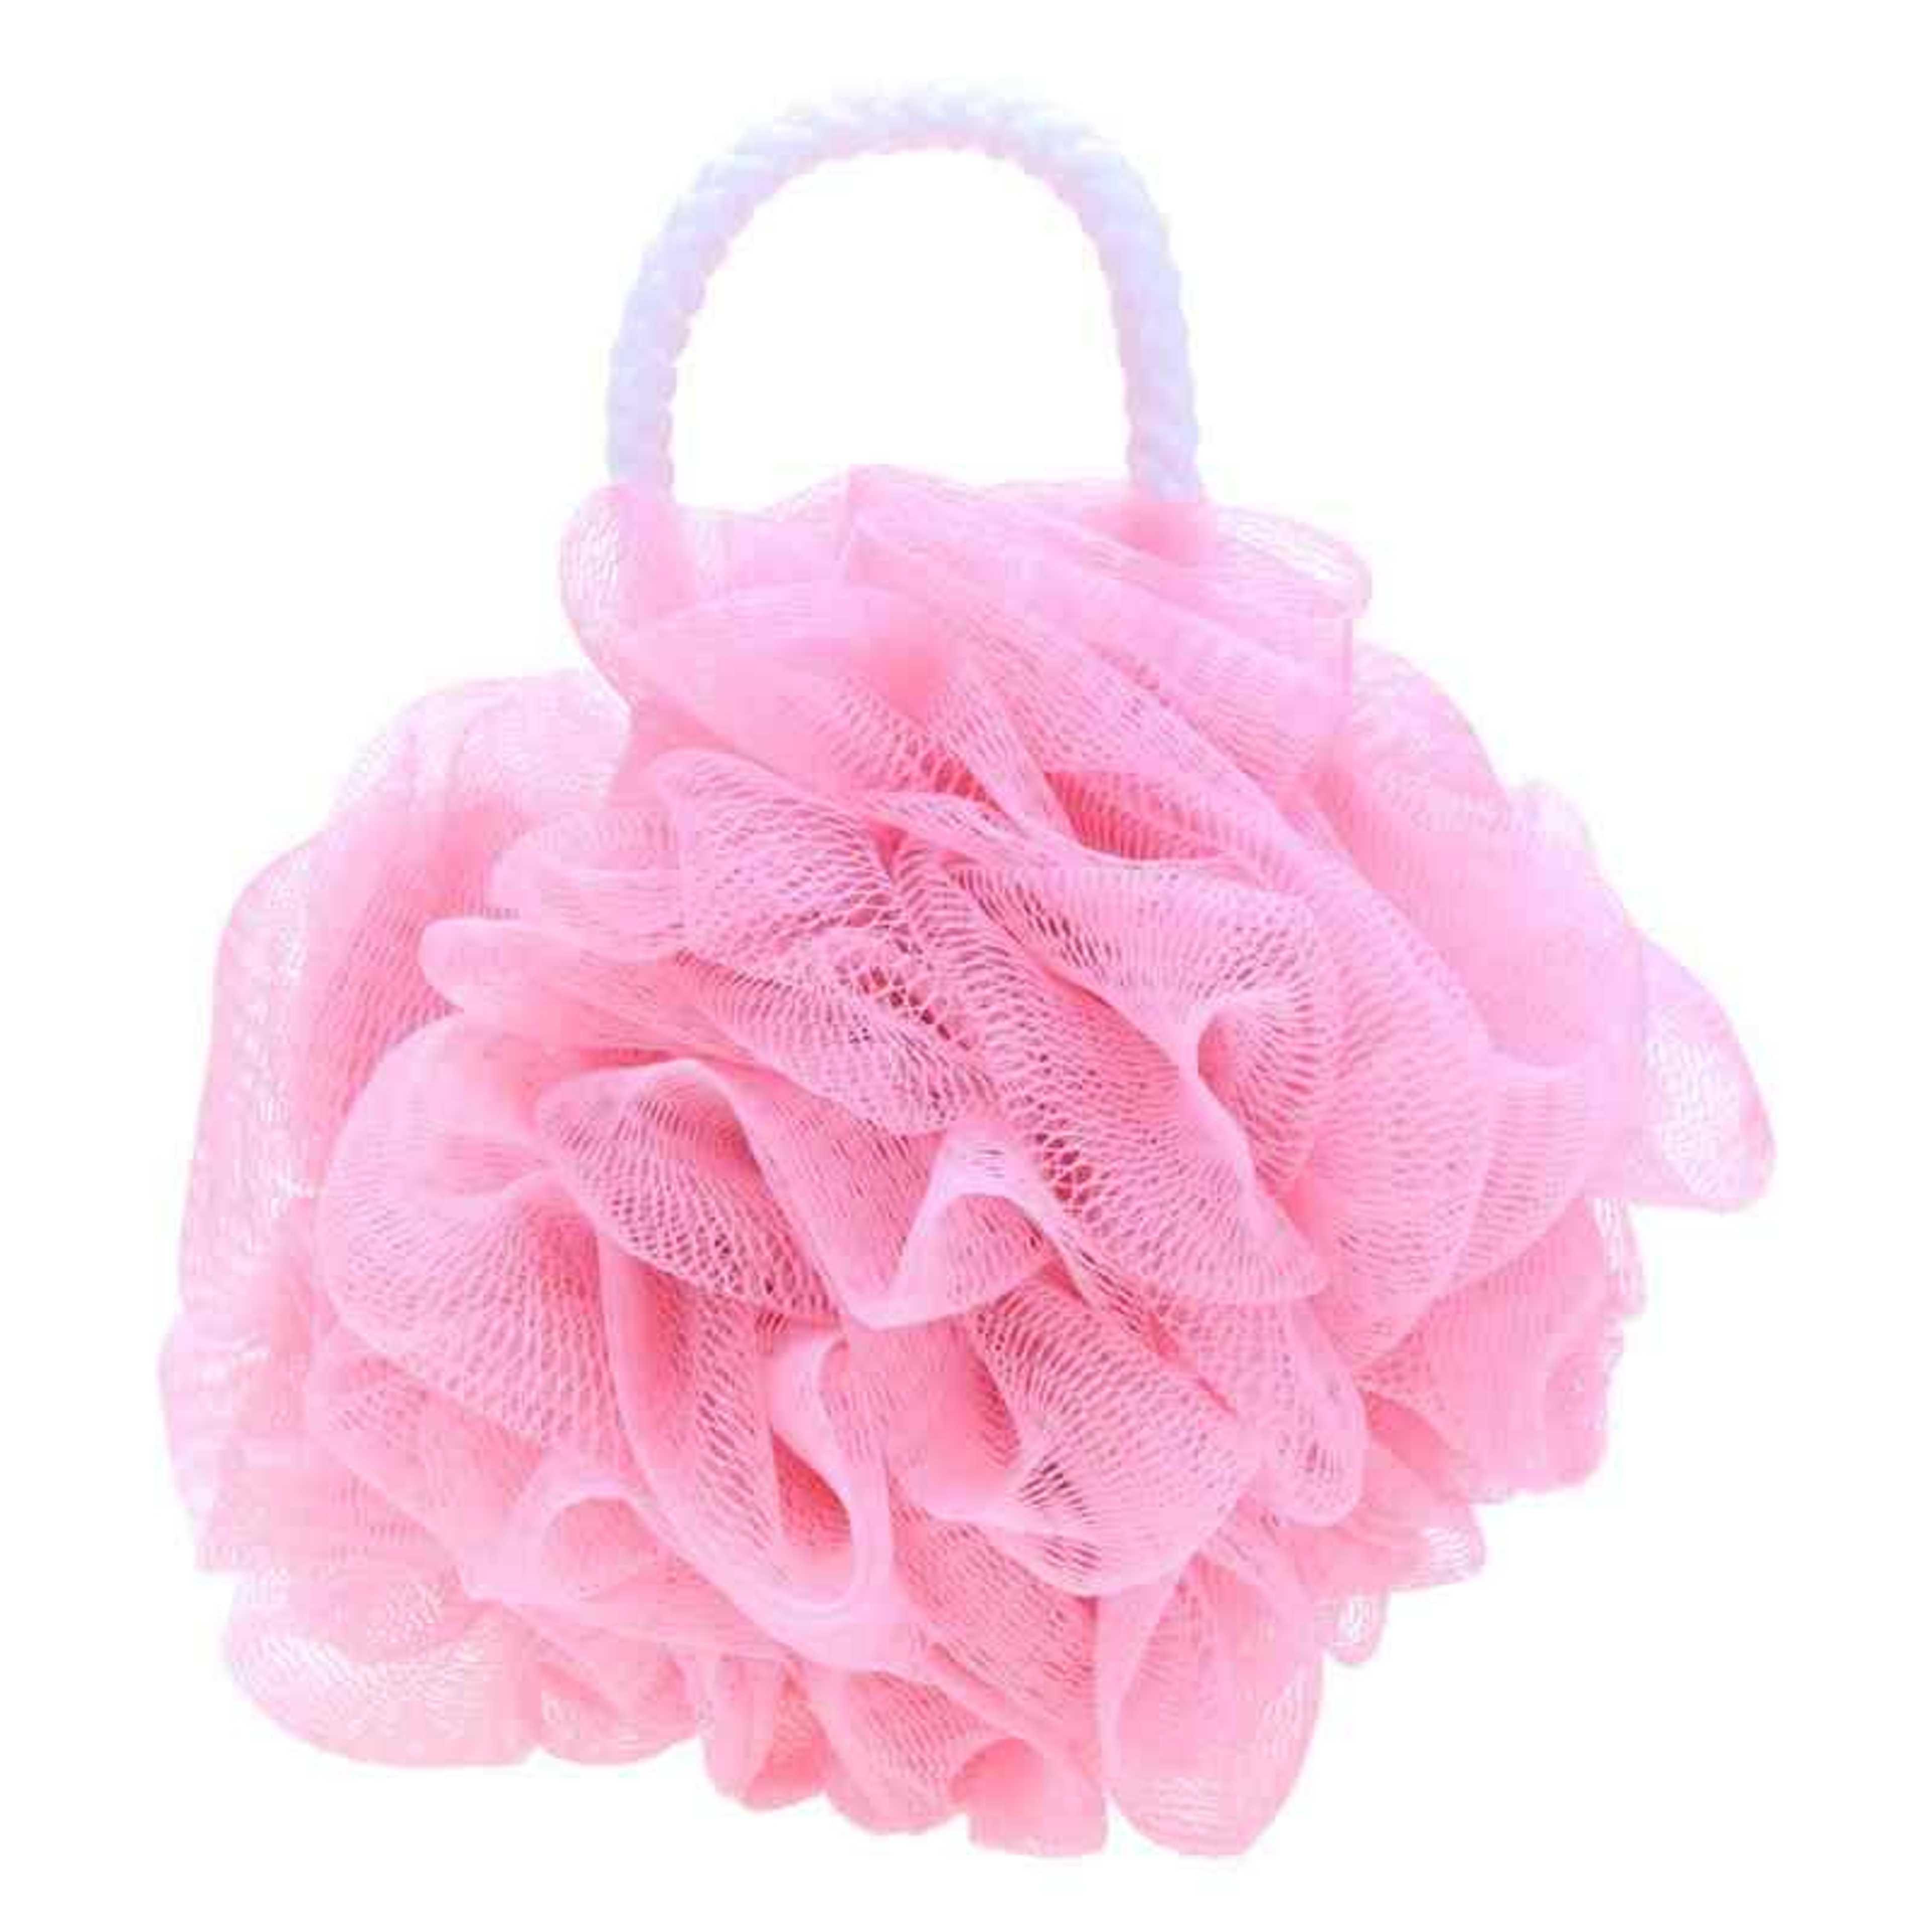 Colorful and easy to hand body exfoliate massage sponge bath ball bath sponge flower bath shower bath mesh ball